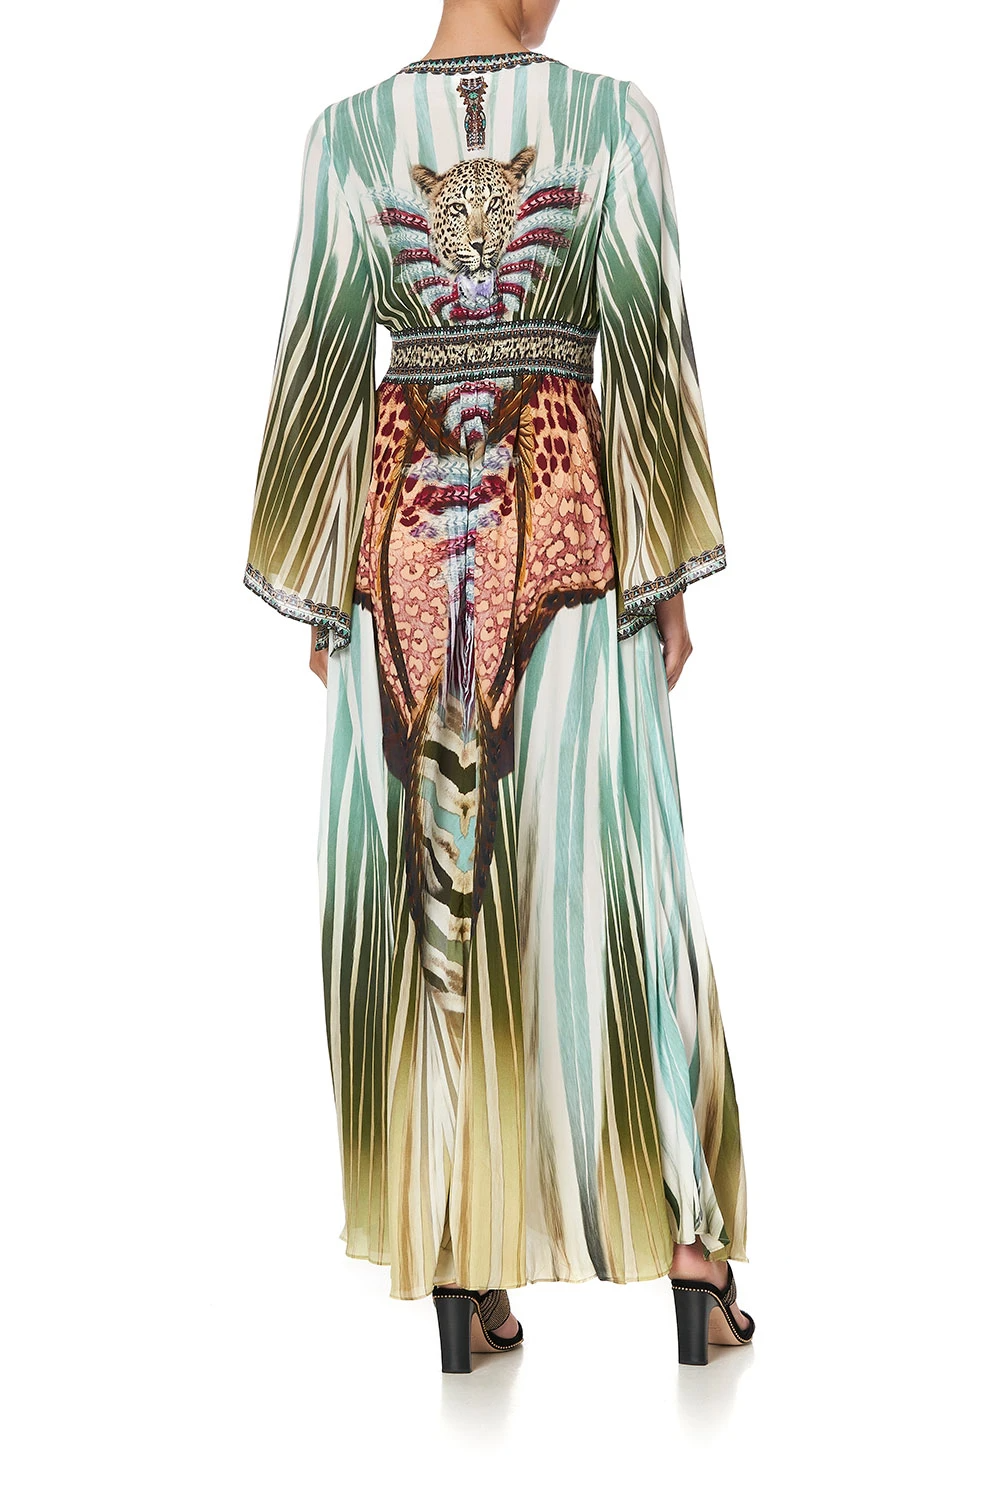 Kimono Sleeve Dress Ideas